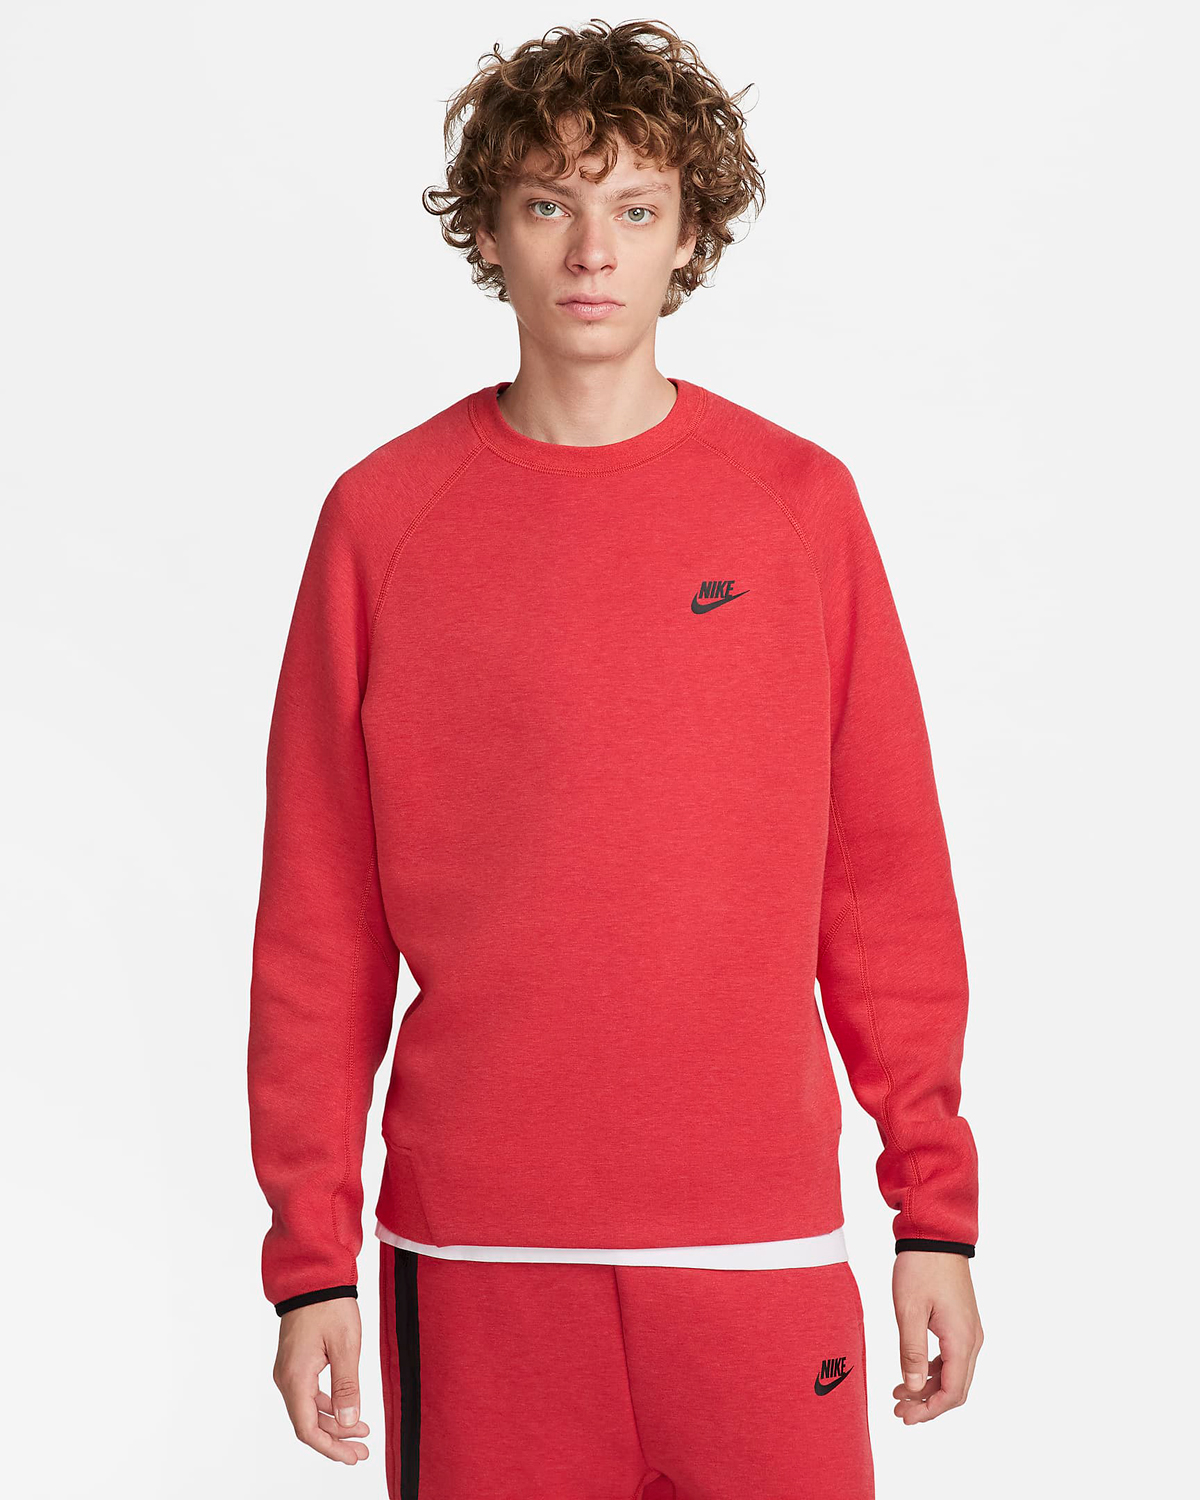 NIke-Tech-Fleece-Sweatshirt-Light-University-Red